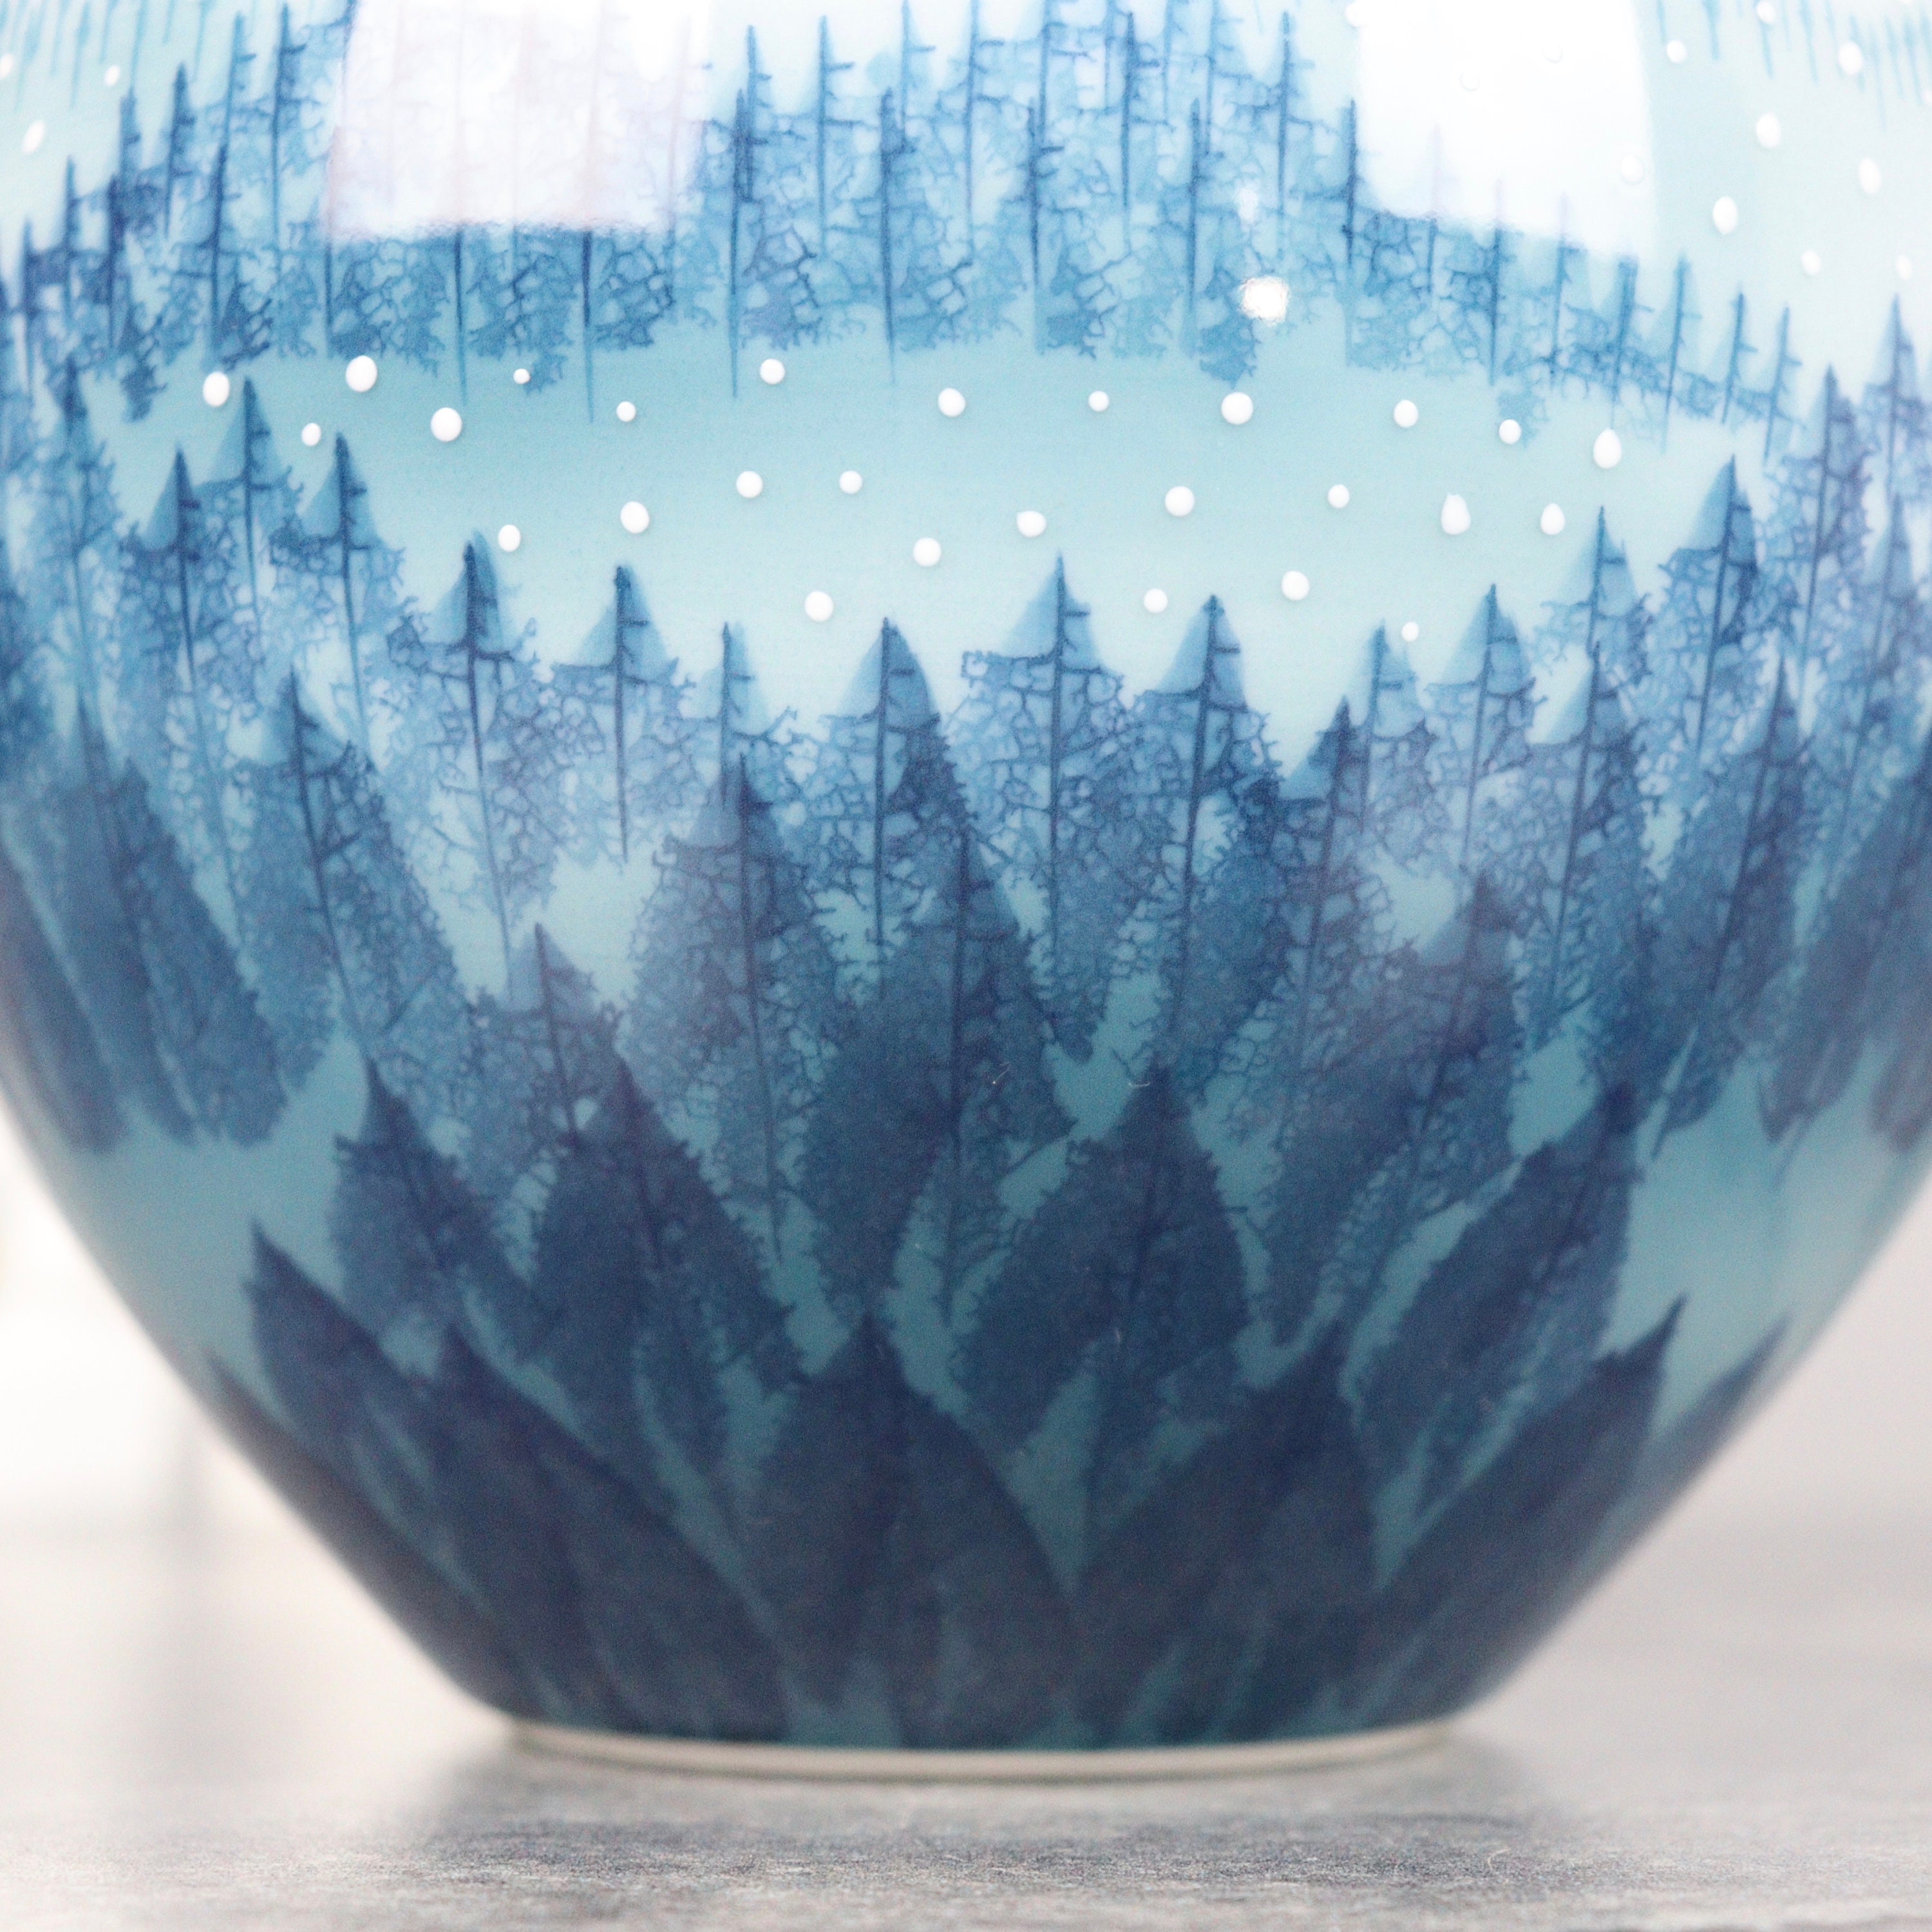 Fine Art Japanese Vase Arita. Artist Fujii Shumei Winter Landscape